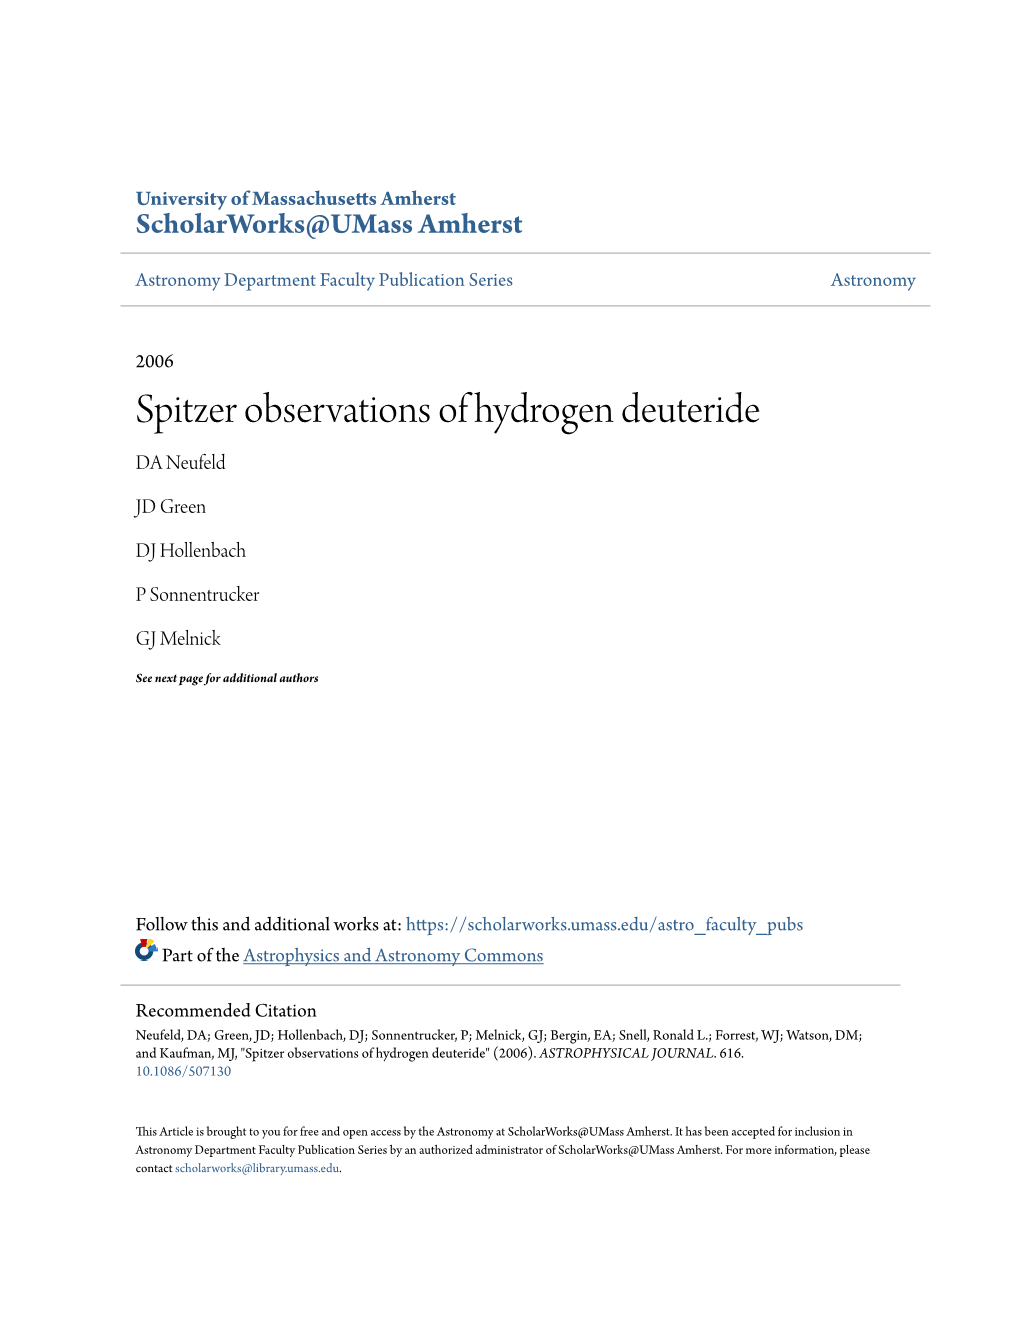 Spitzer Observations of Hydrogen Deuteride DA Neufeld